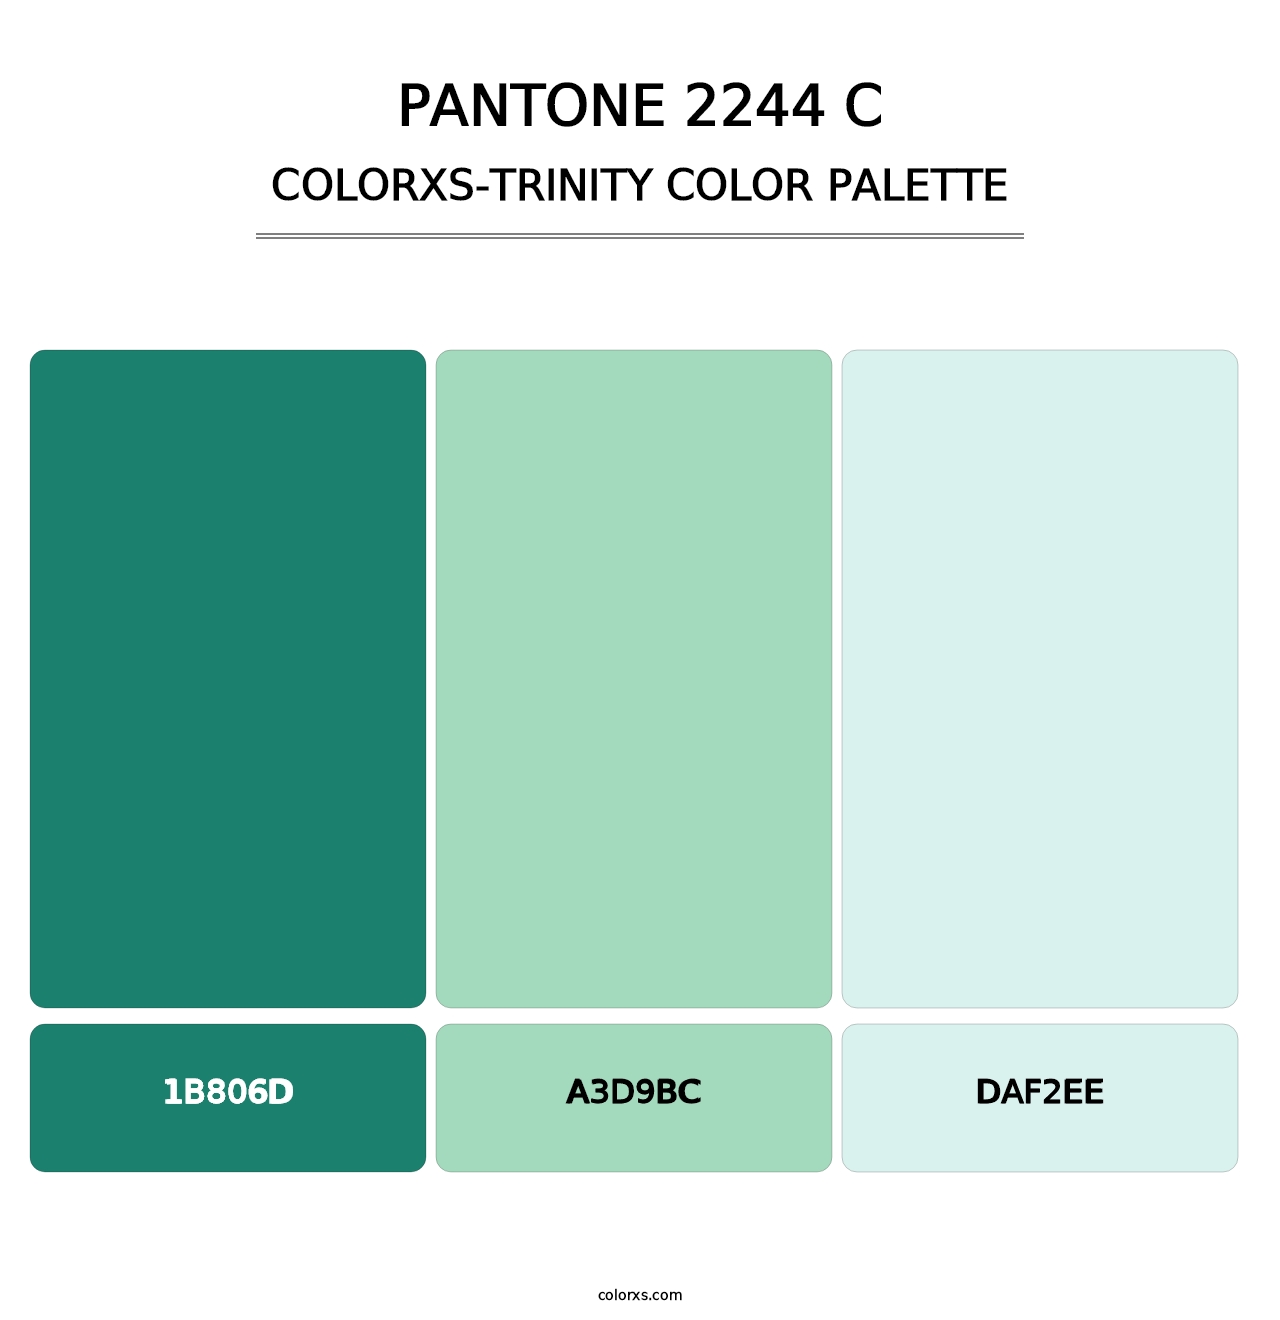 PANTONE 2244 C - Colorxs Trinity Palette